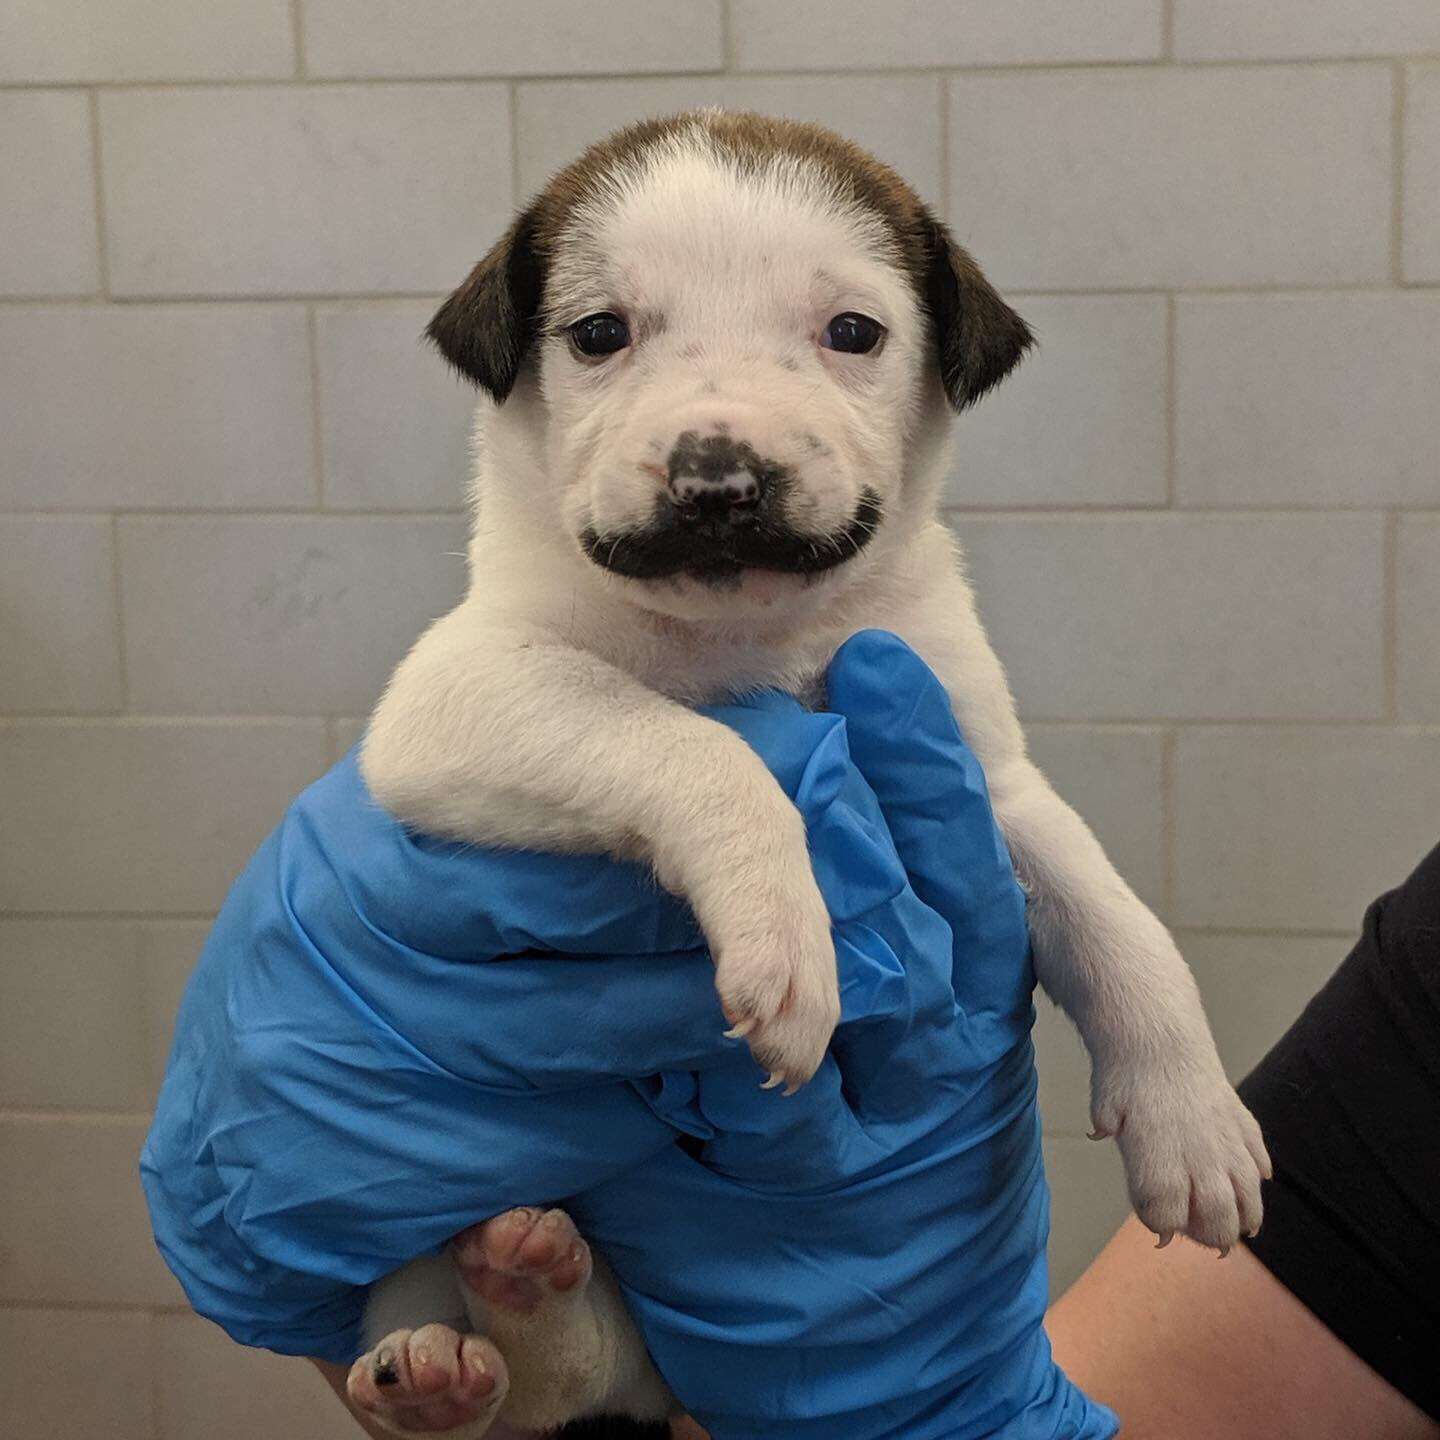 Puppy born with handlebar mustache